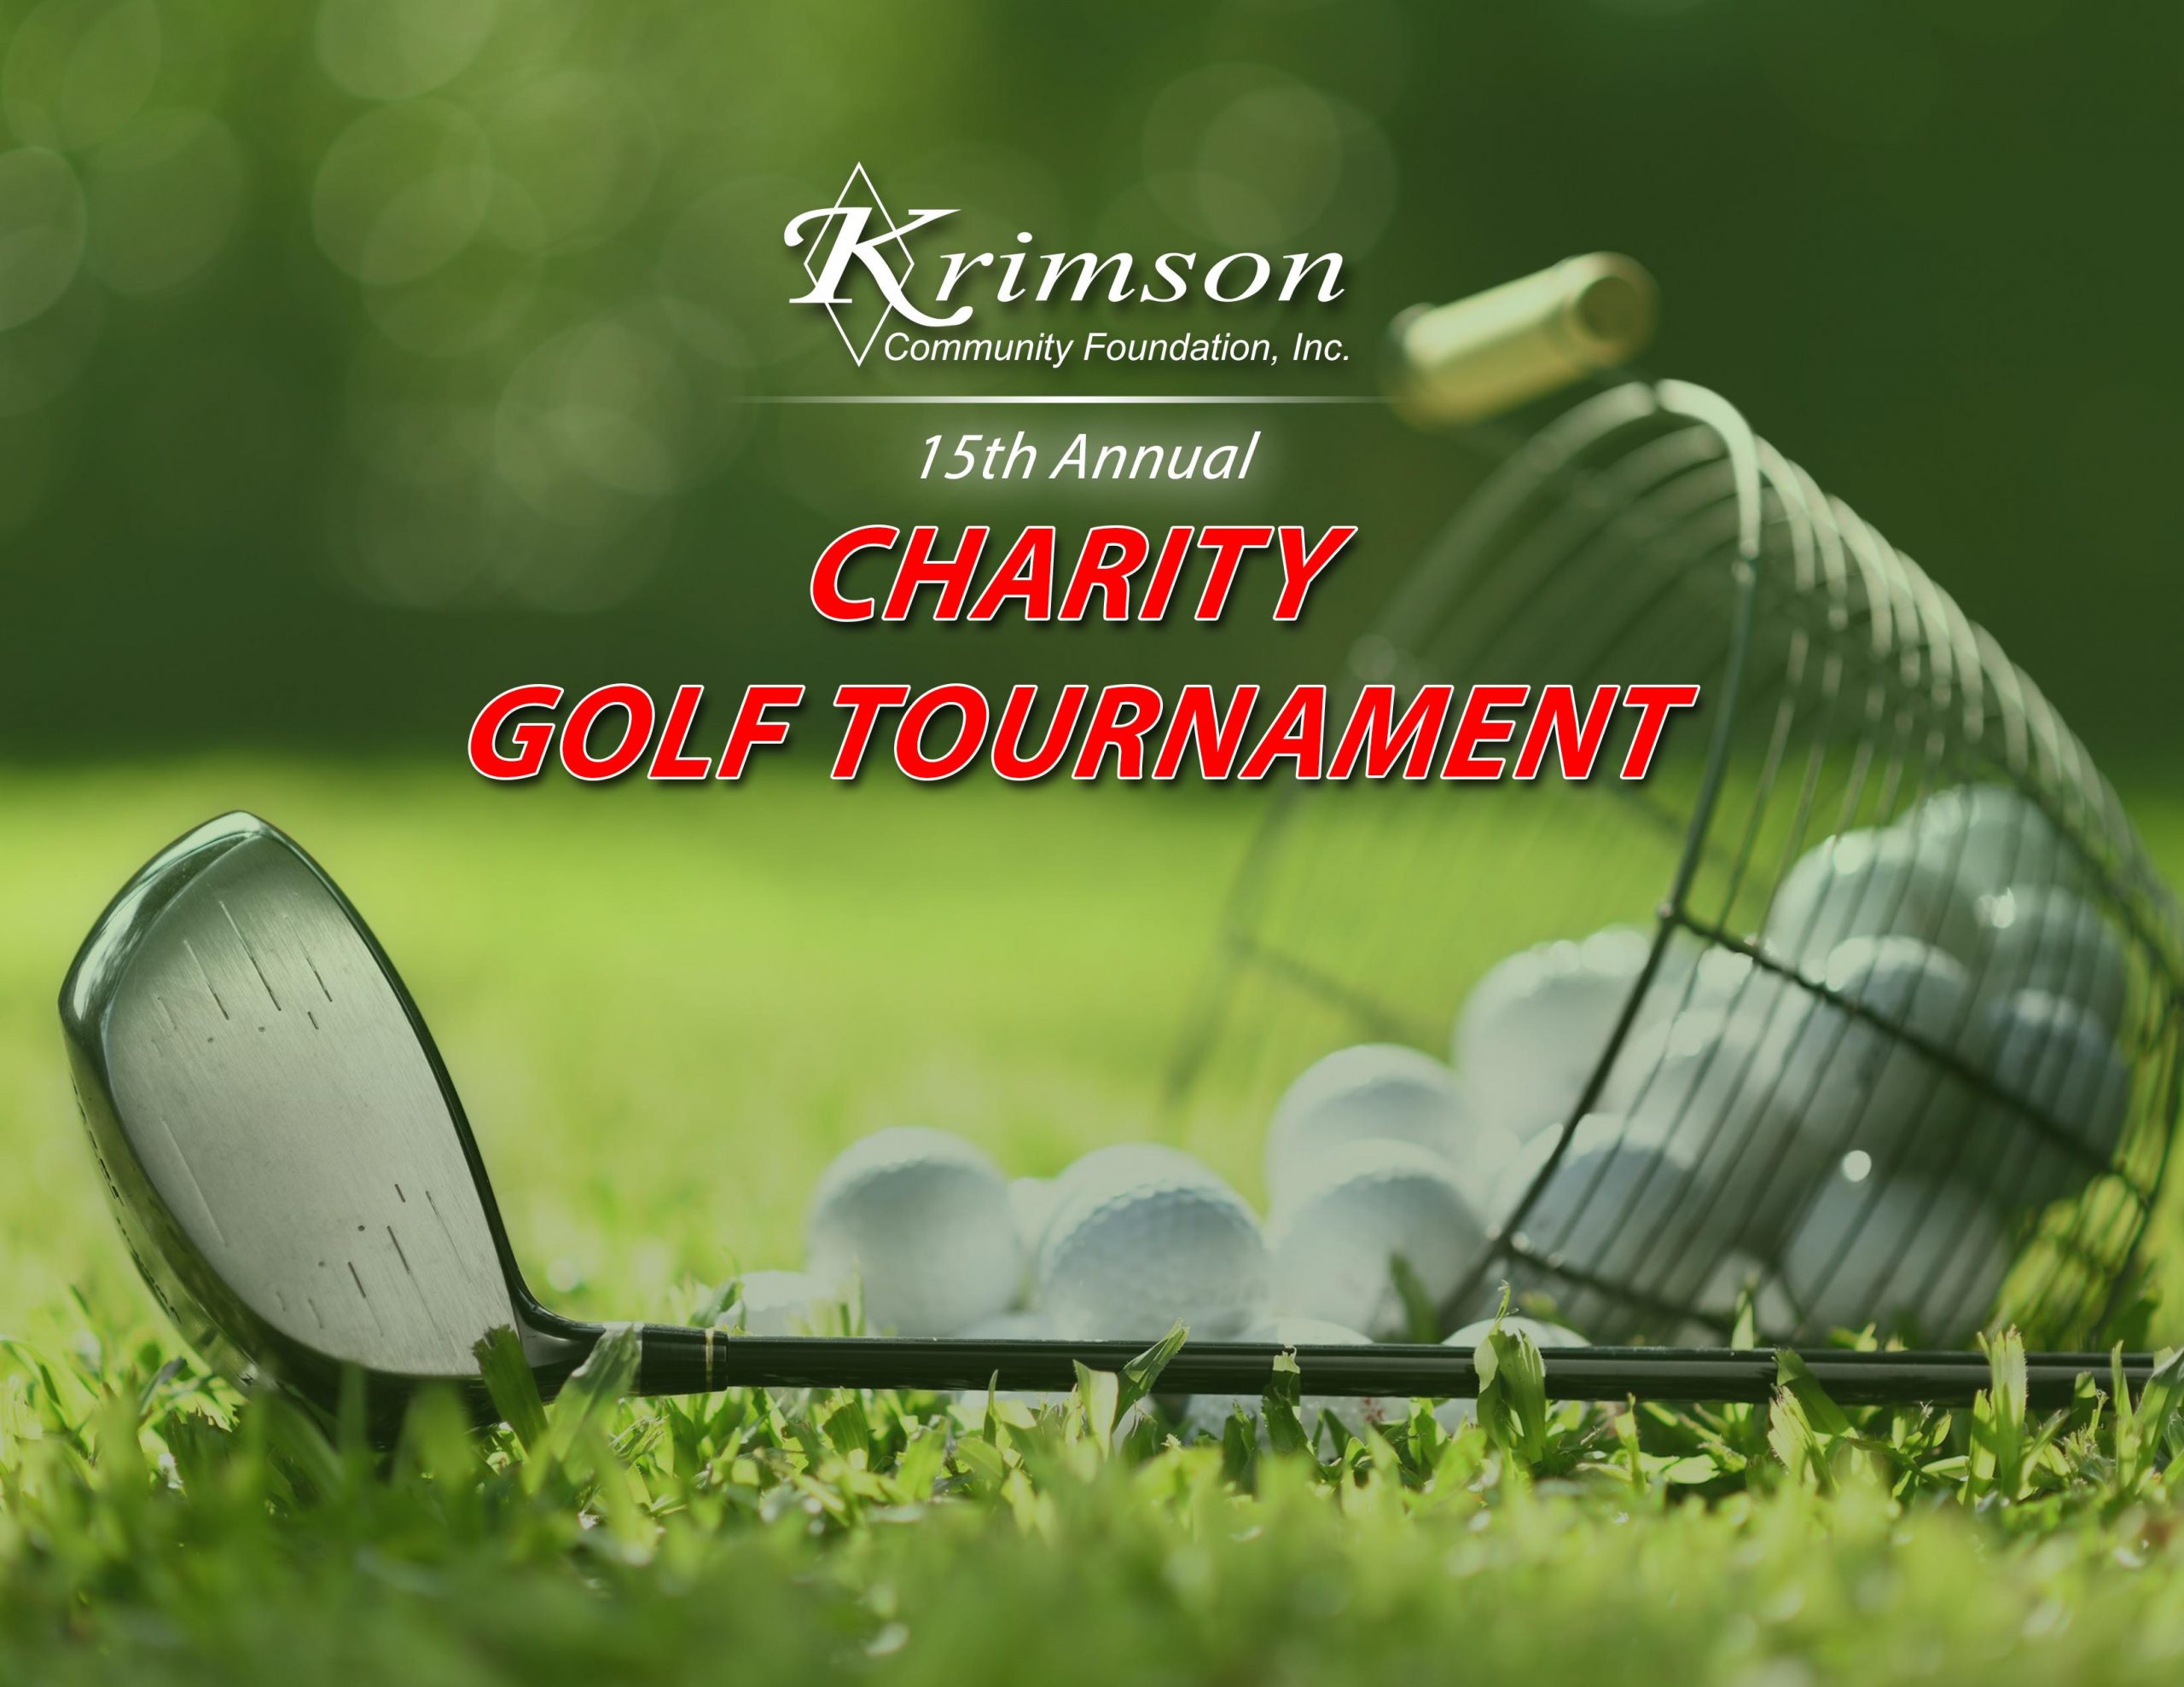 2020 Annual Krimson Community Foundation Charity Golf Tournament